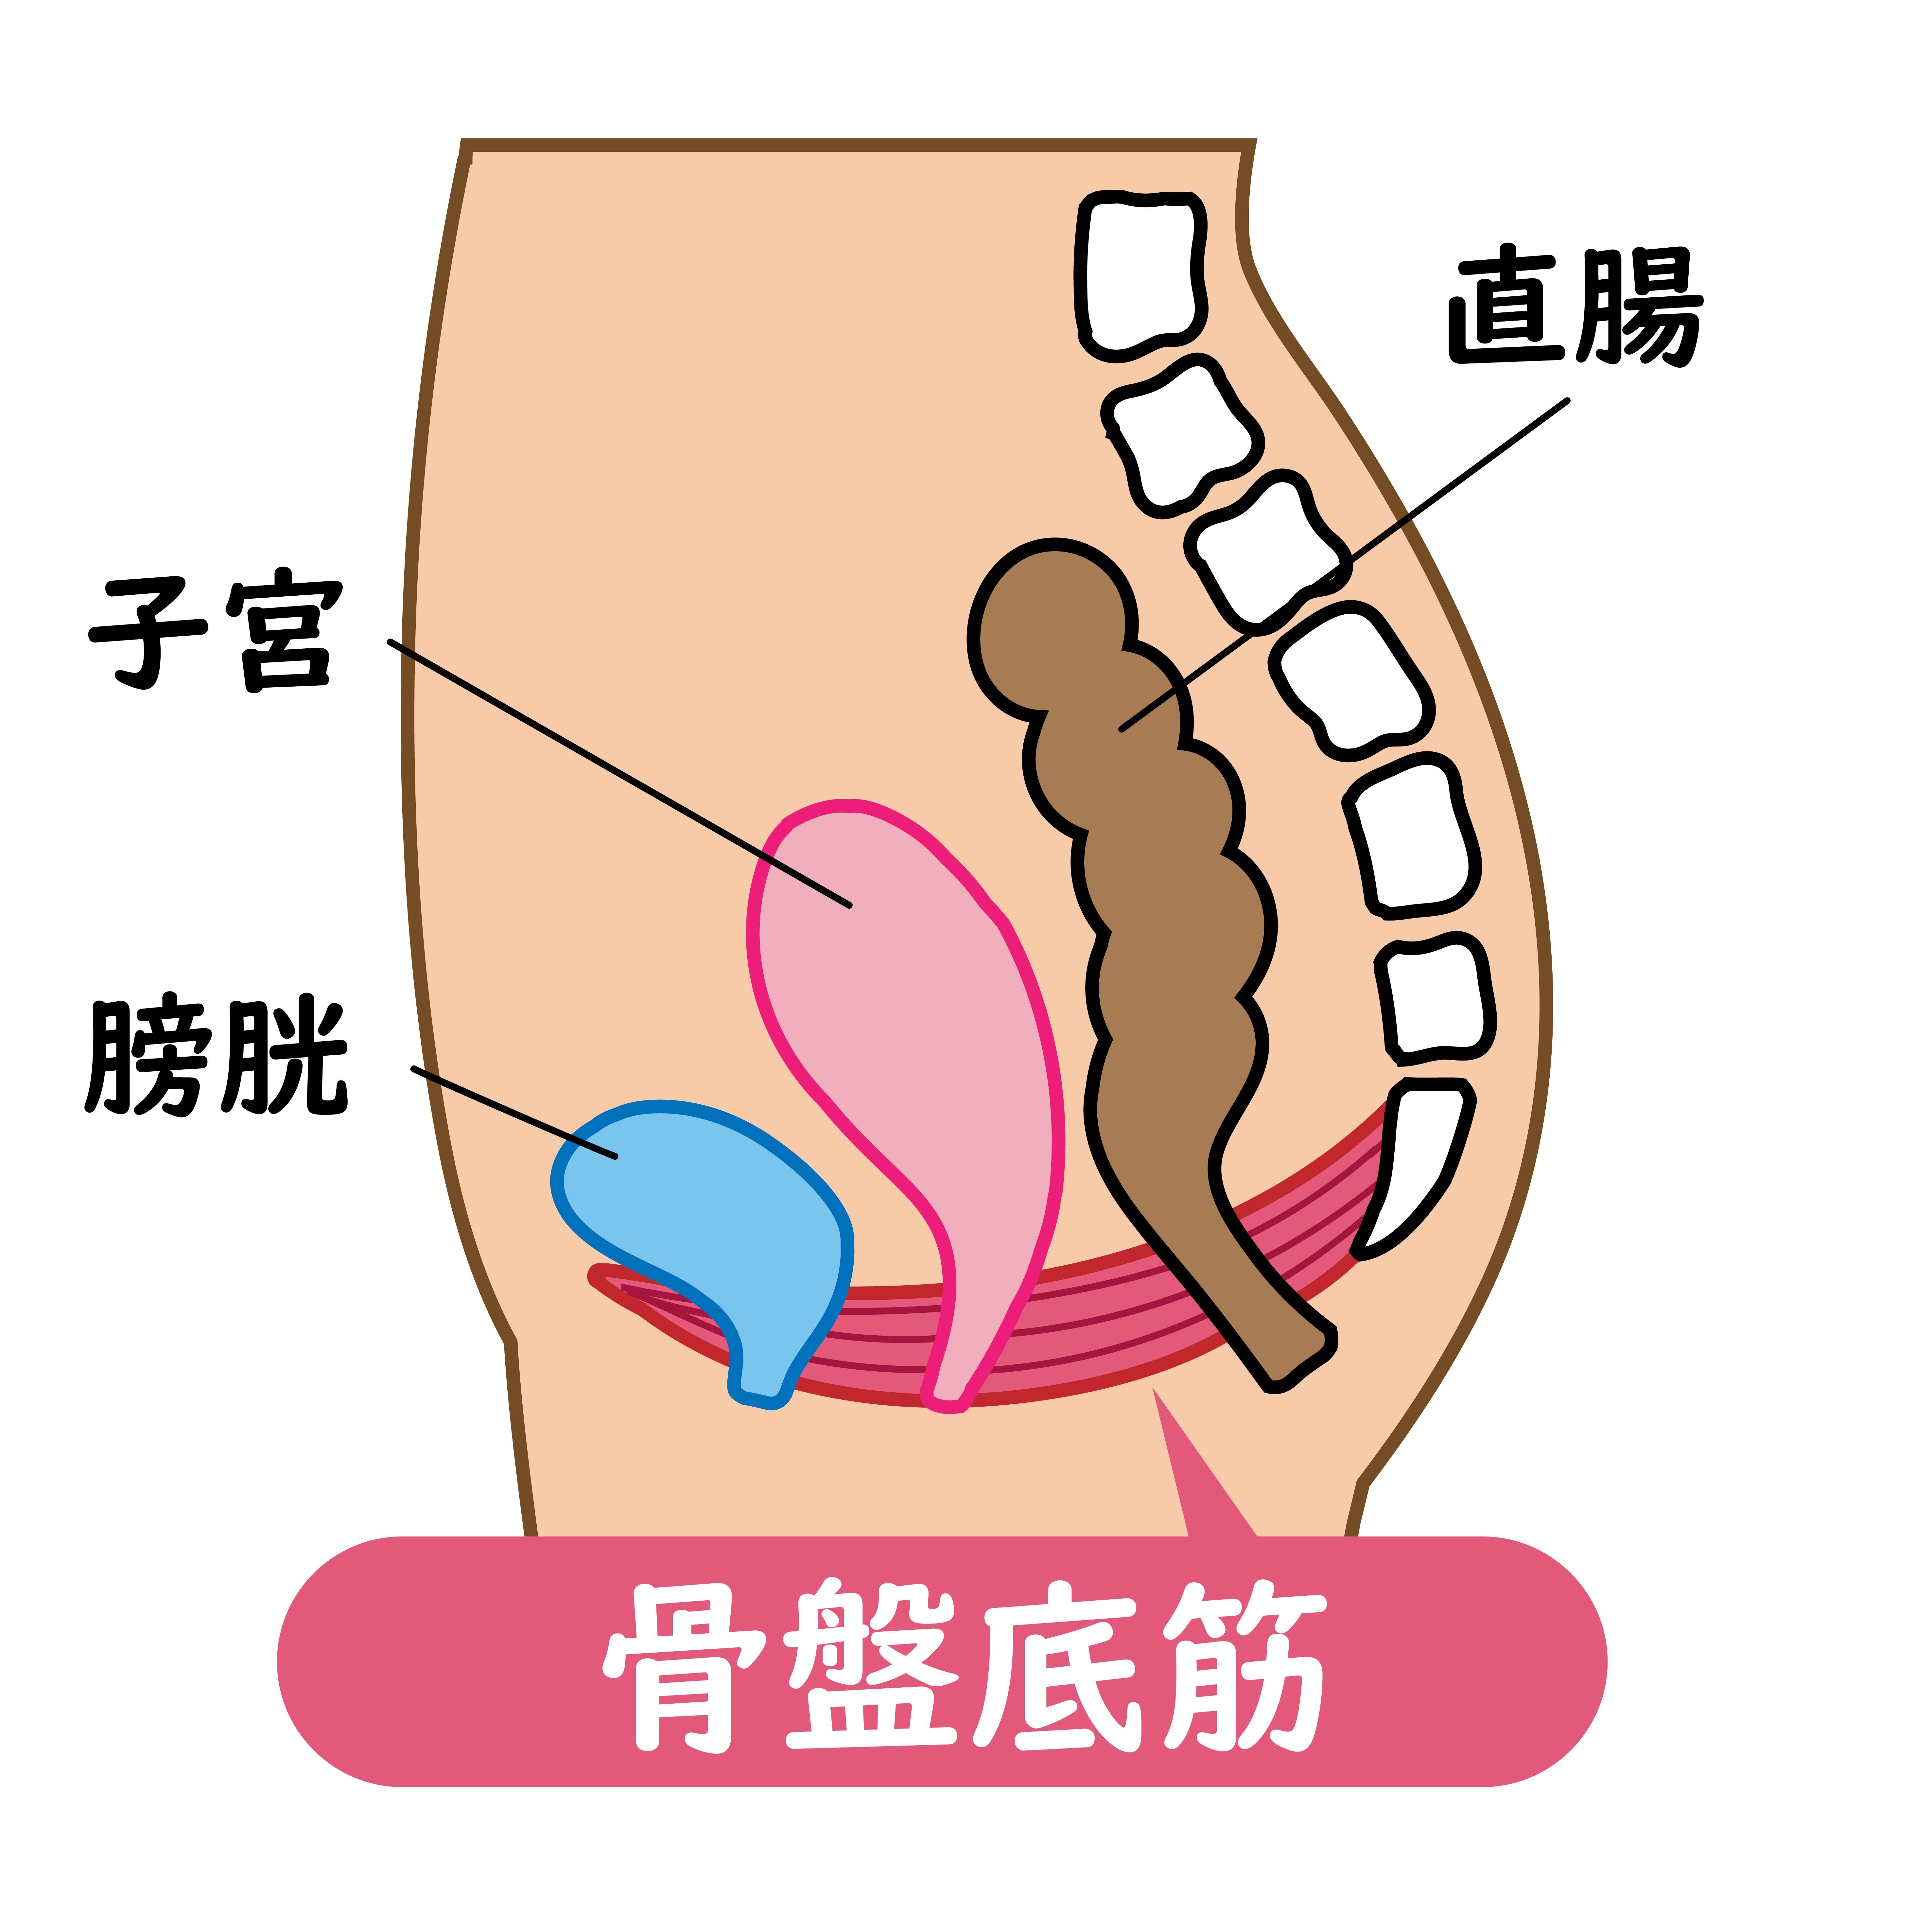 pelvic floor muscle diagram an illustration